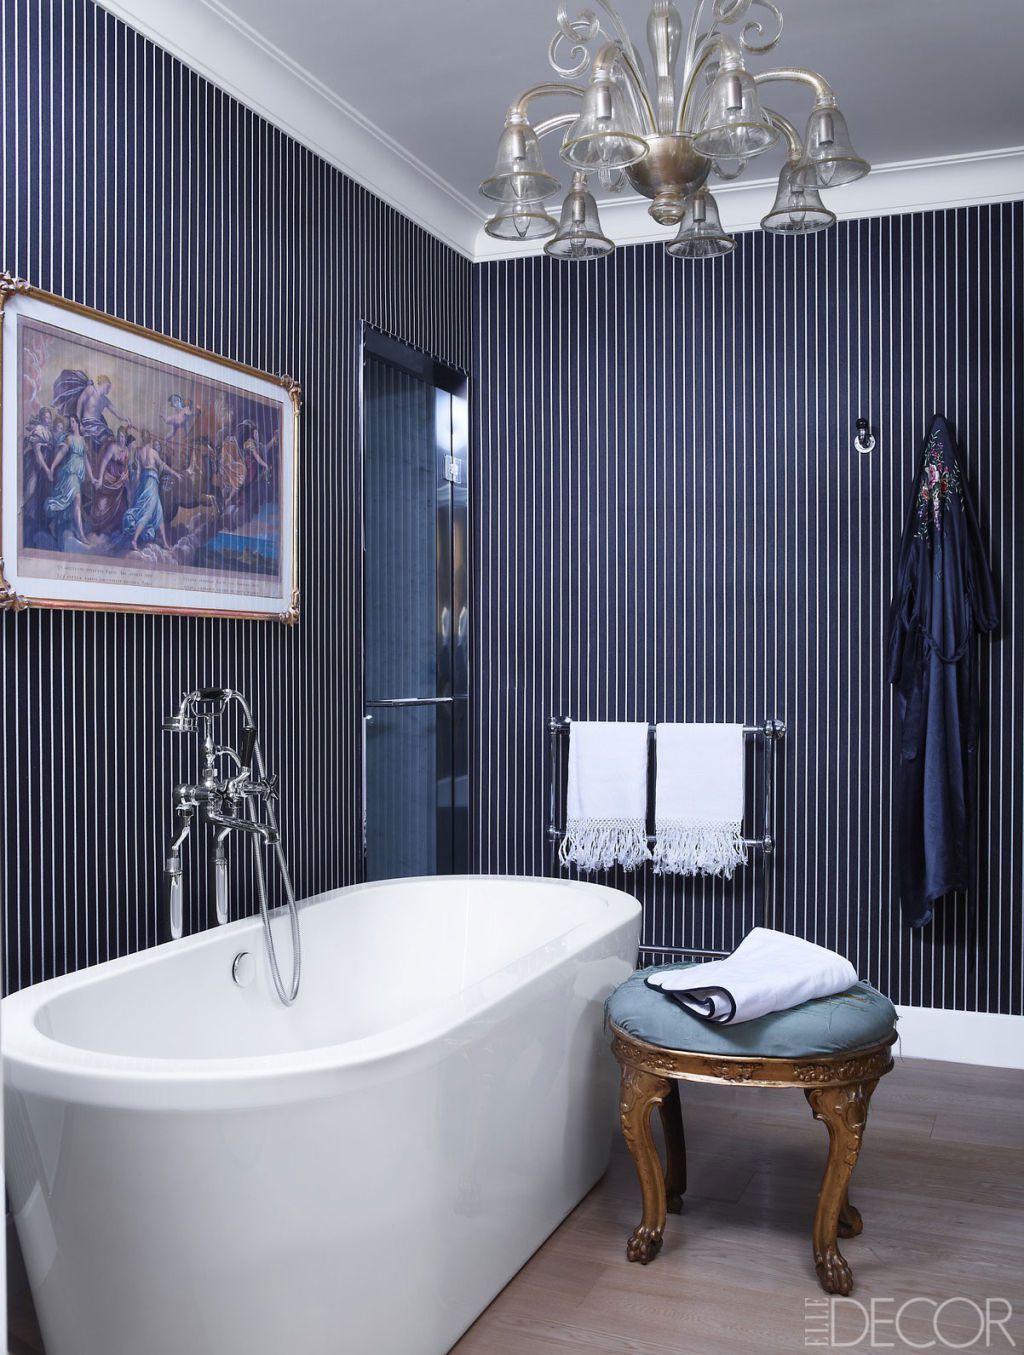 21 Blue Bathroom Ideas With Timeless Style